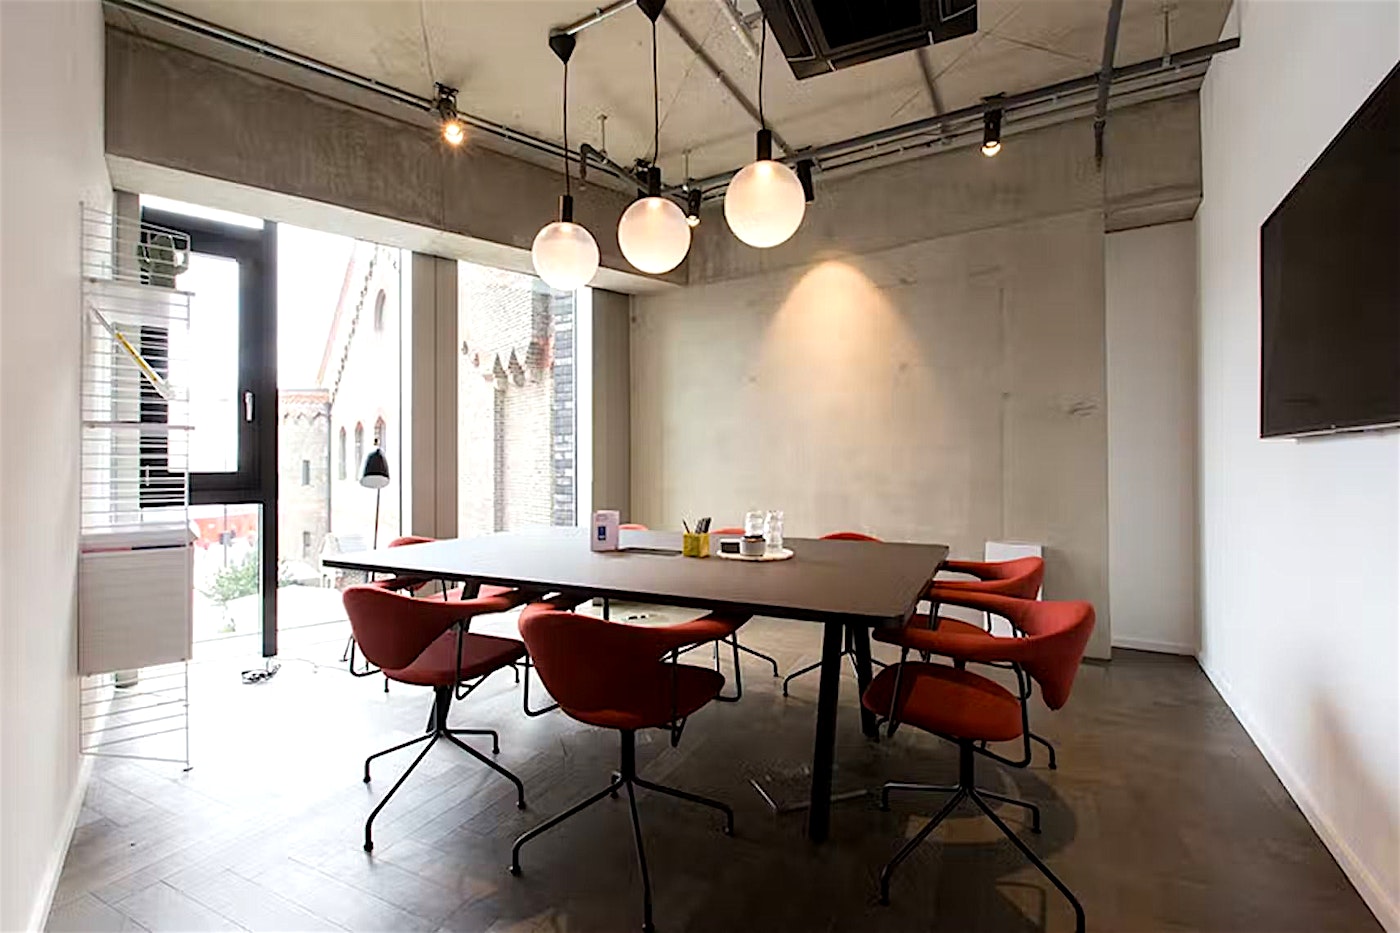 A concrete meeting room in Kings Cross, London